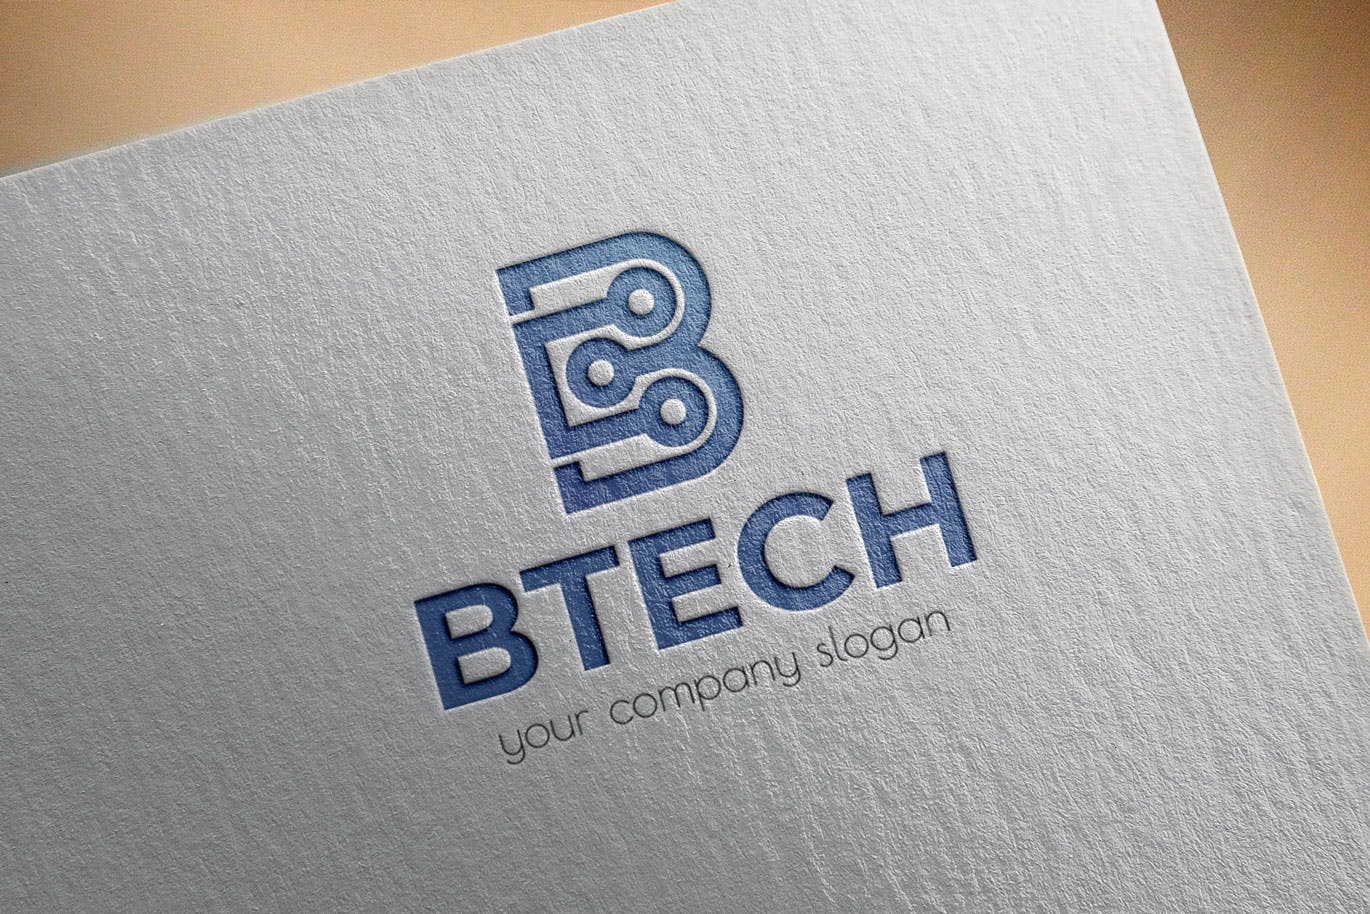 基于B字母图形的企业Logo设计蚂蚁素材精选模板 Letter Based Business Logo Template插图(2)